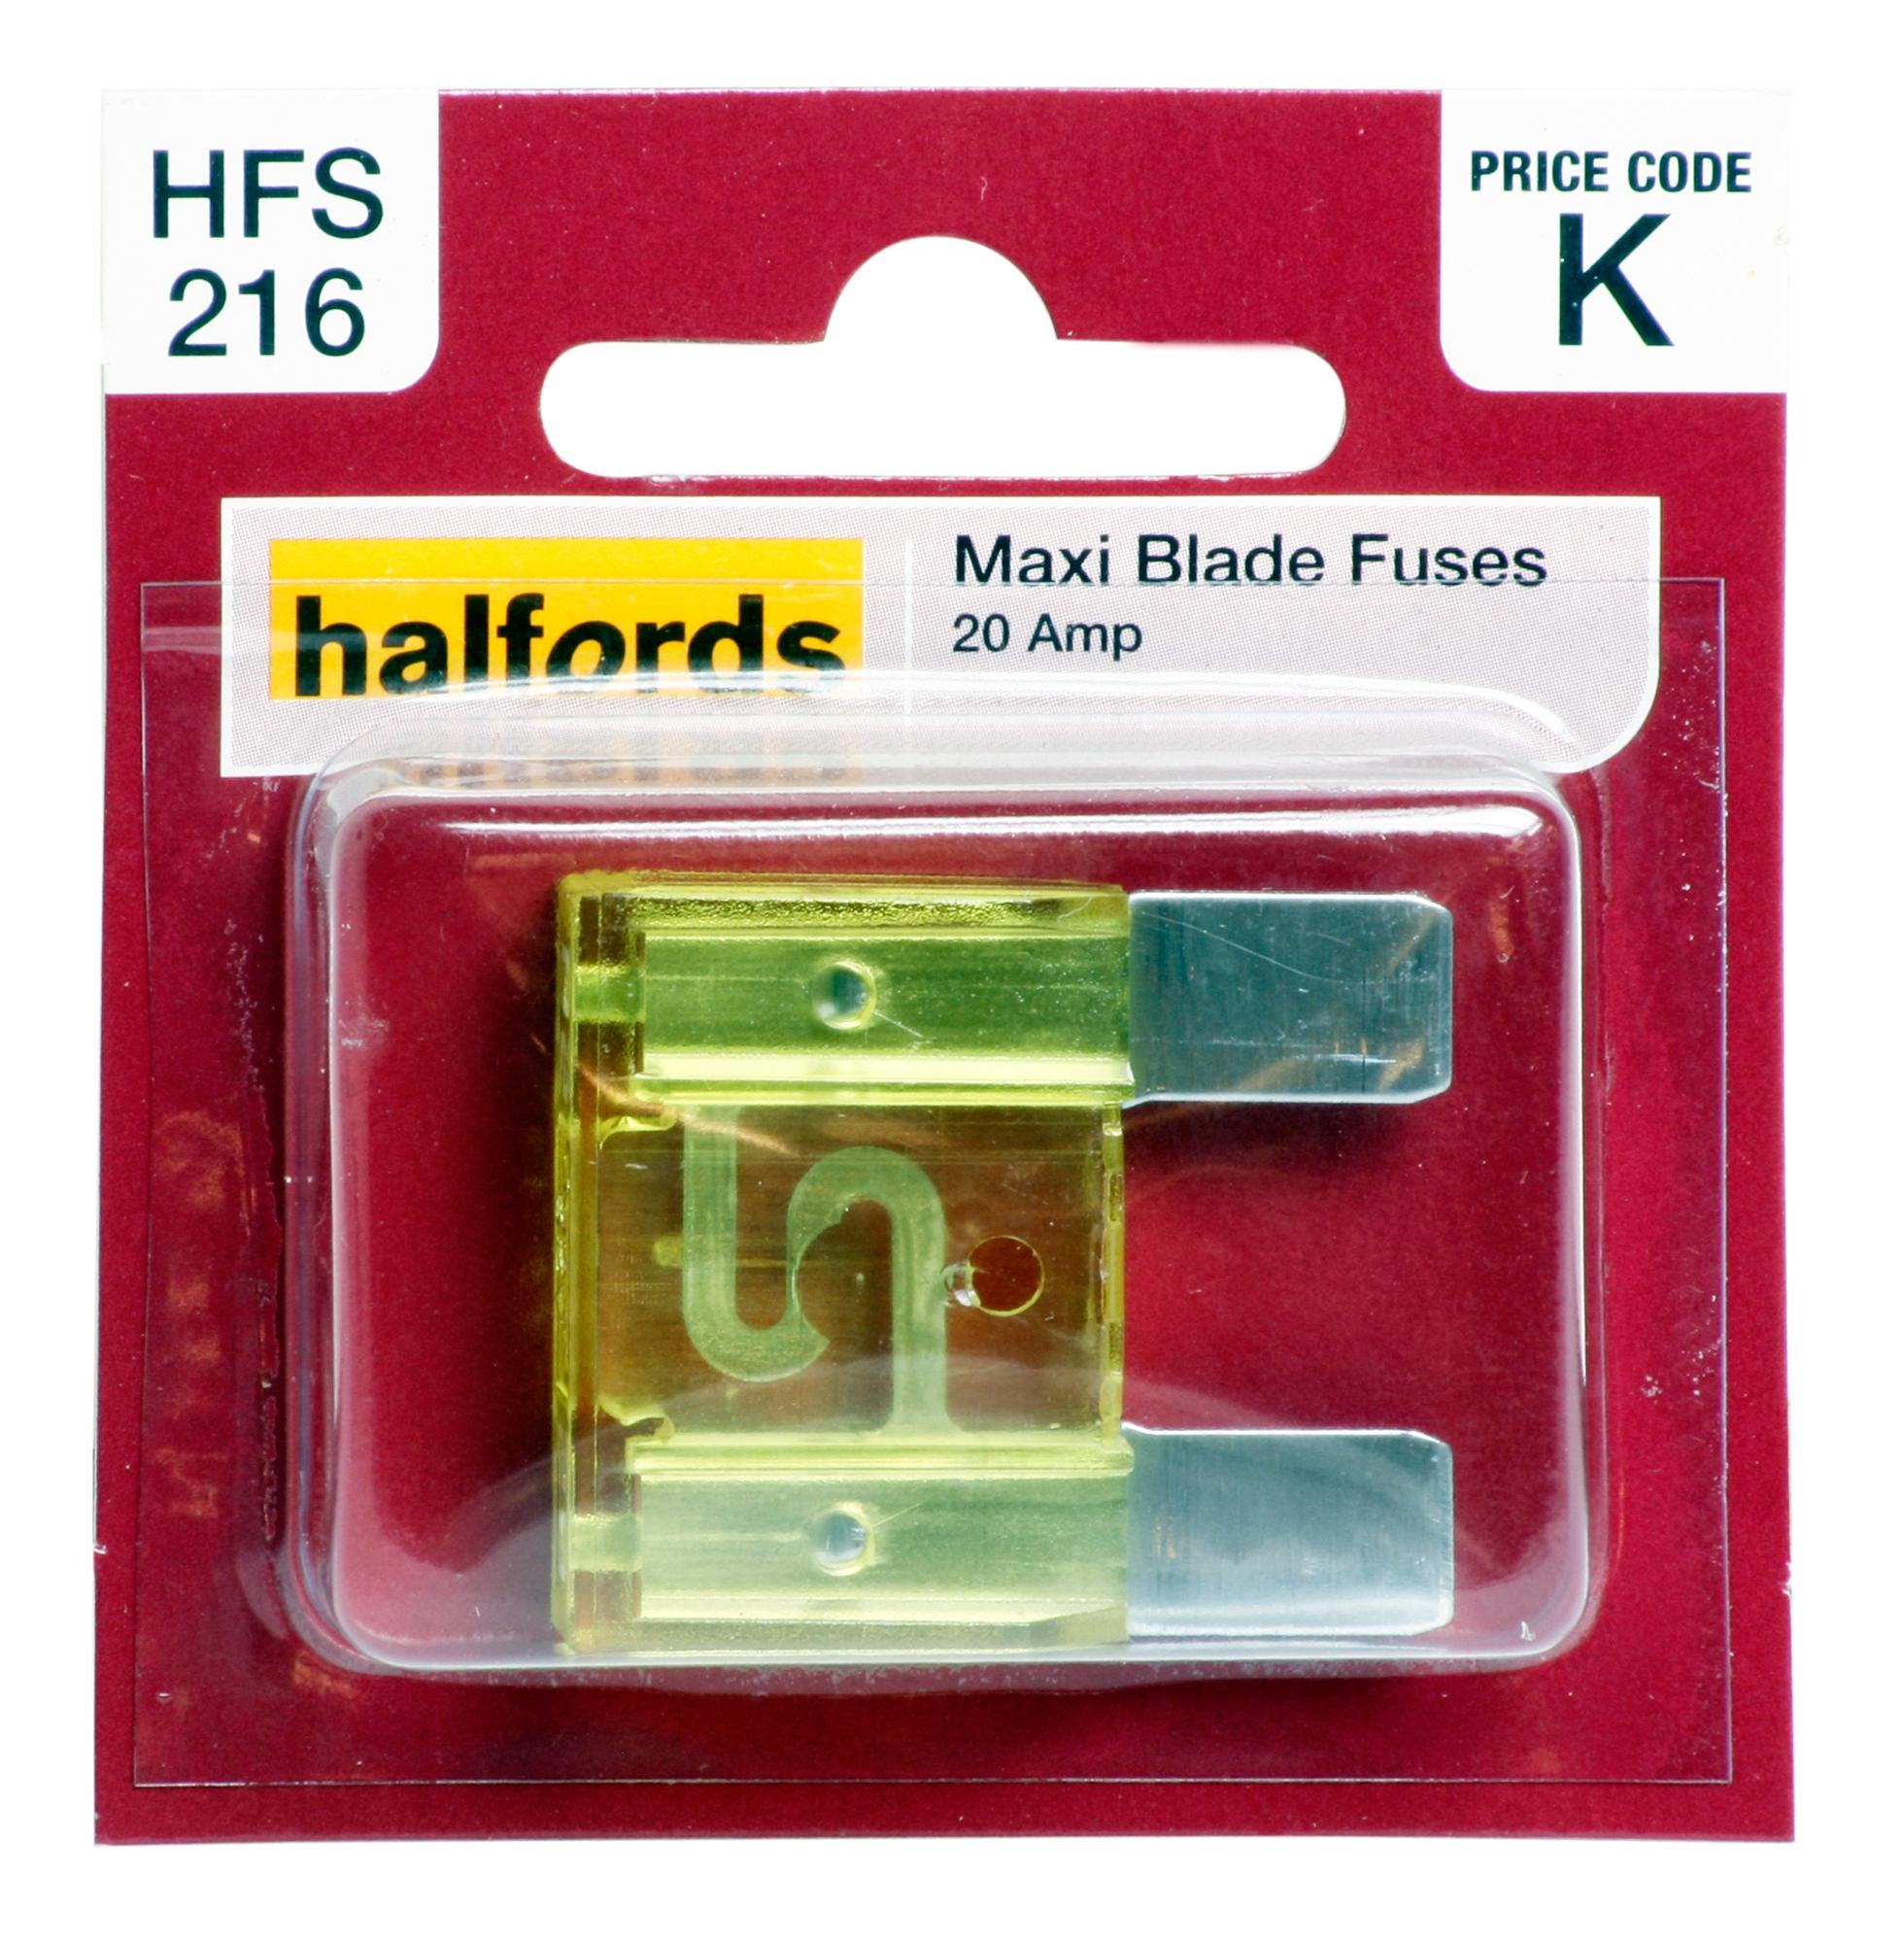 Halfords Maxi Blade Fuse 20 Amp (Hfs216)